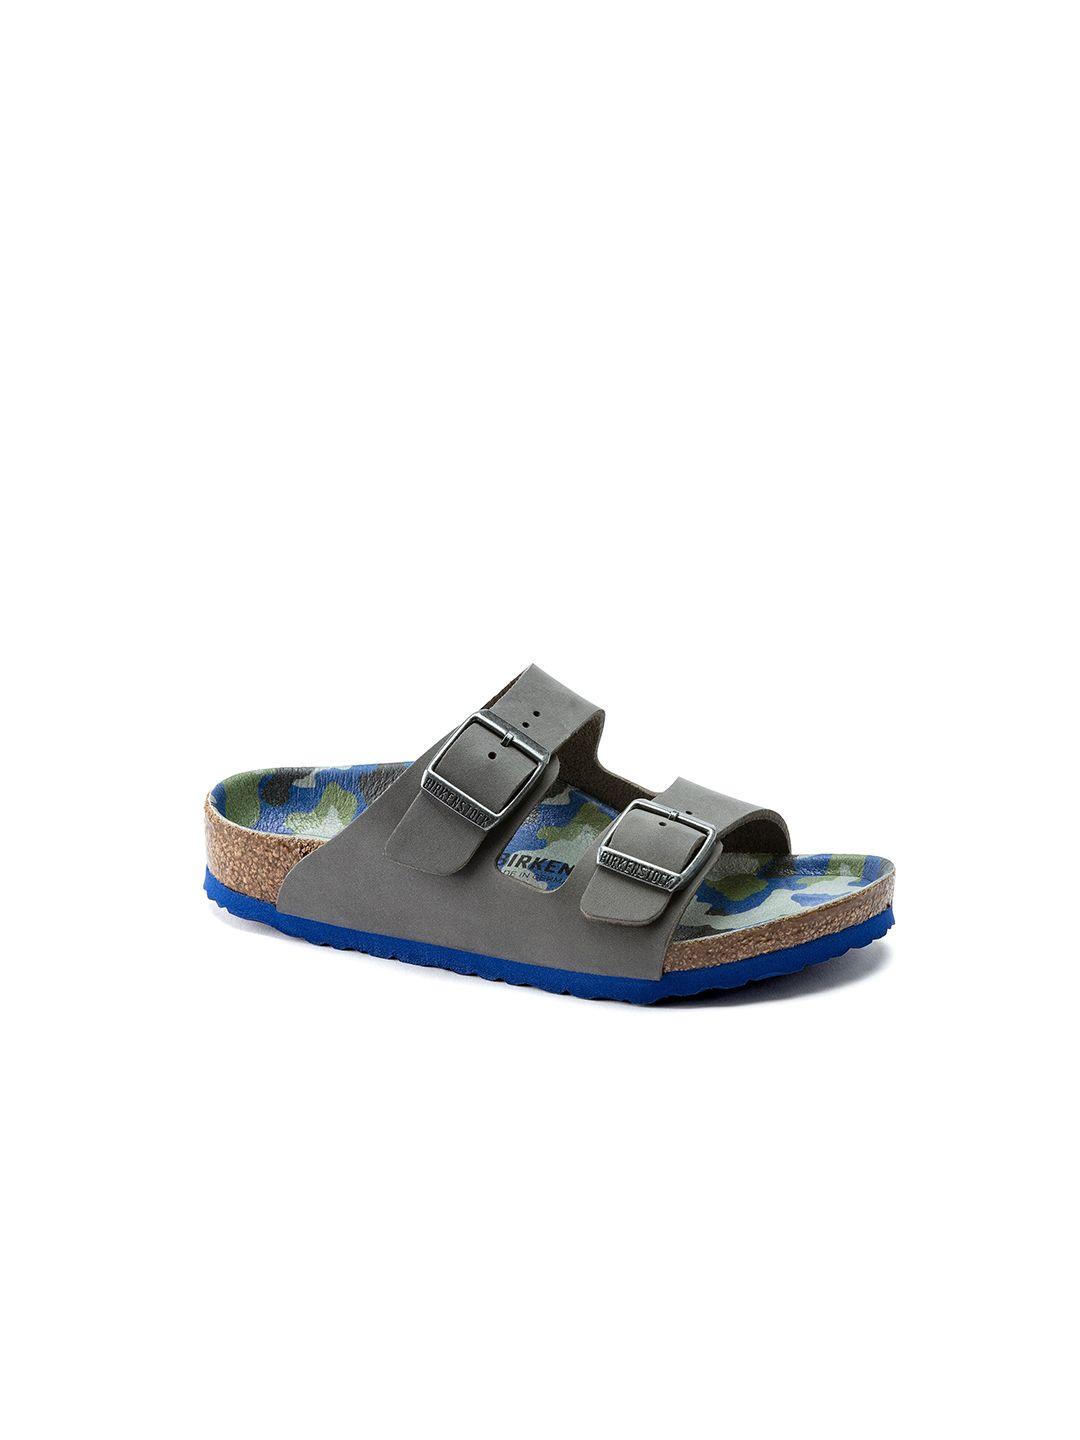 birkenstock boys grey & blue narrow width arizona leather comfort sandals